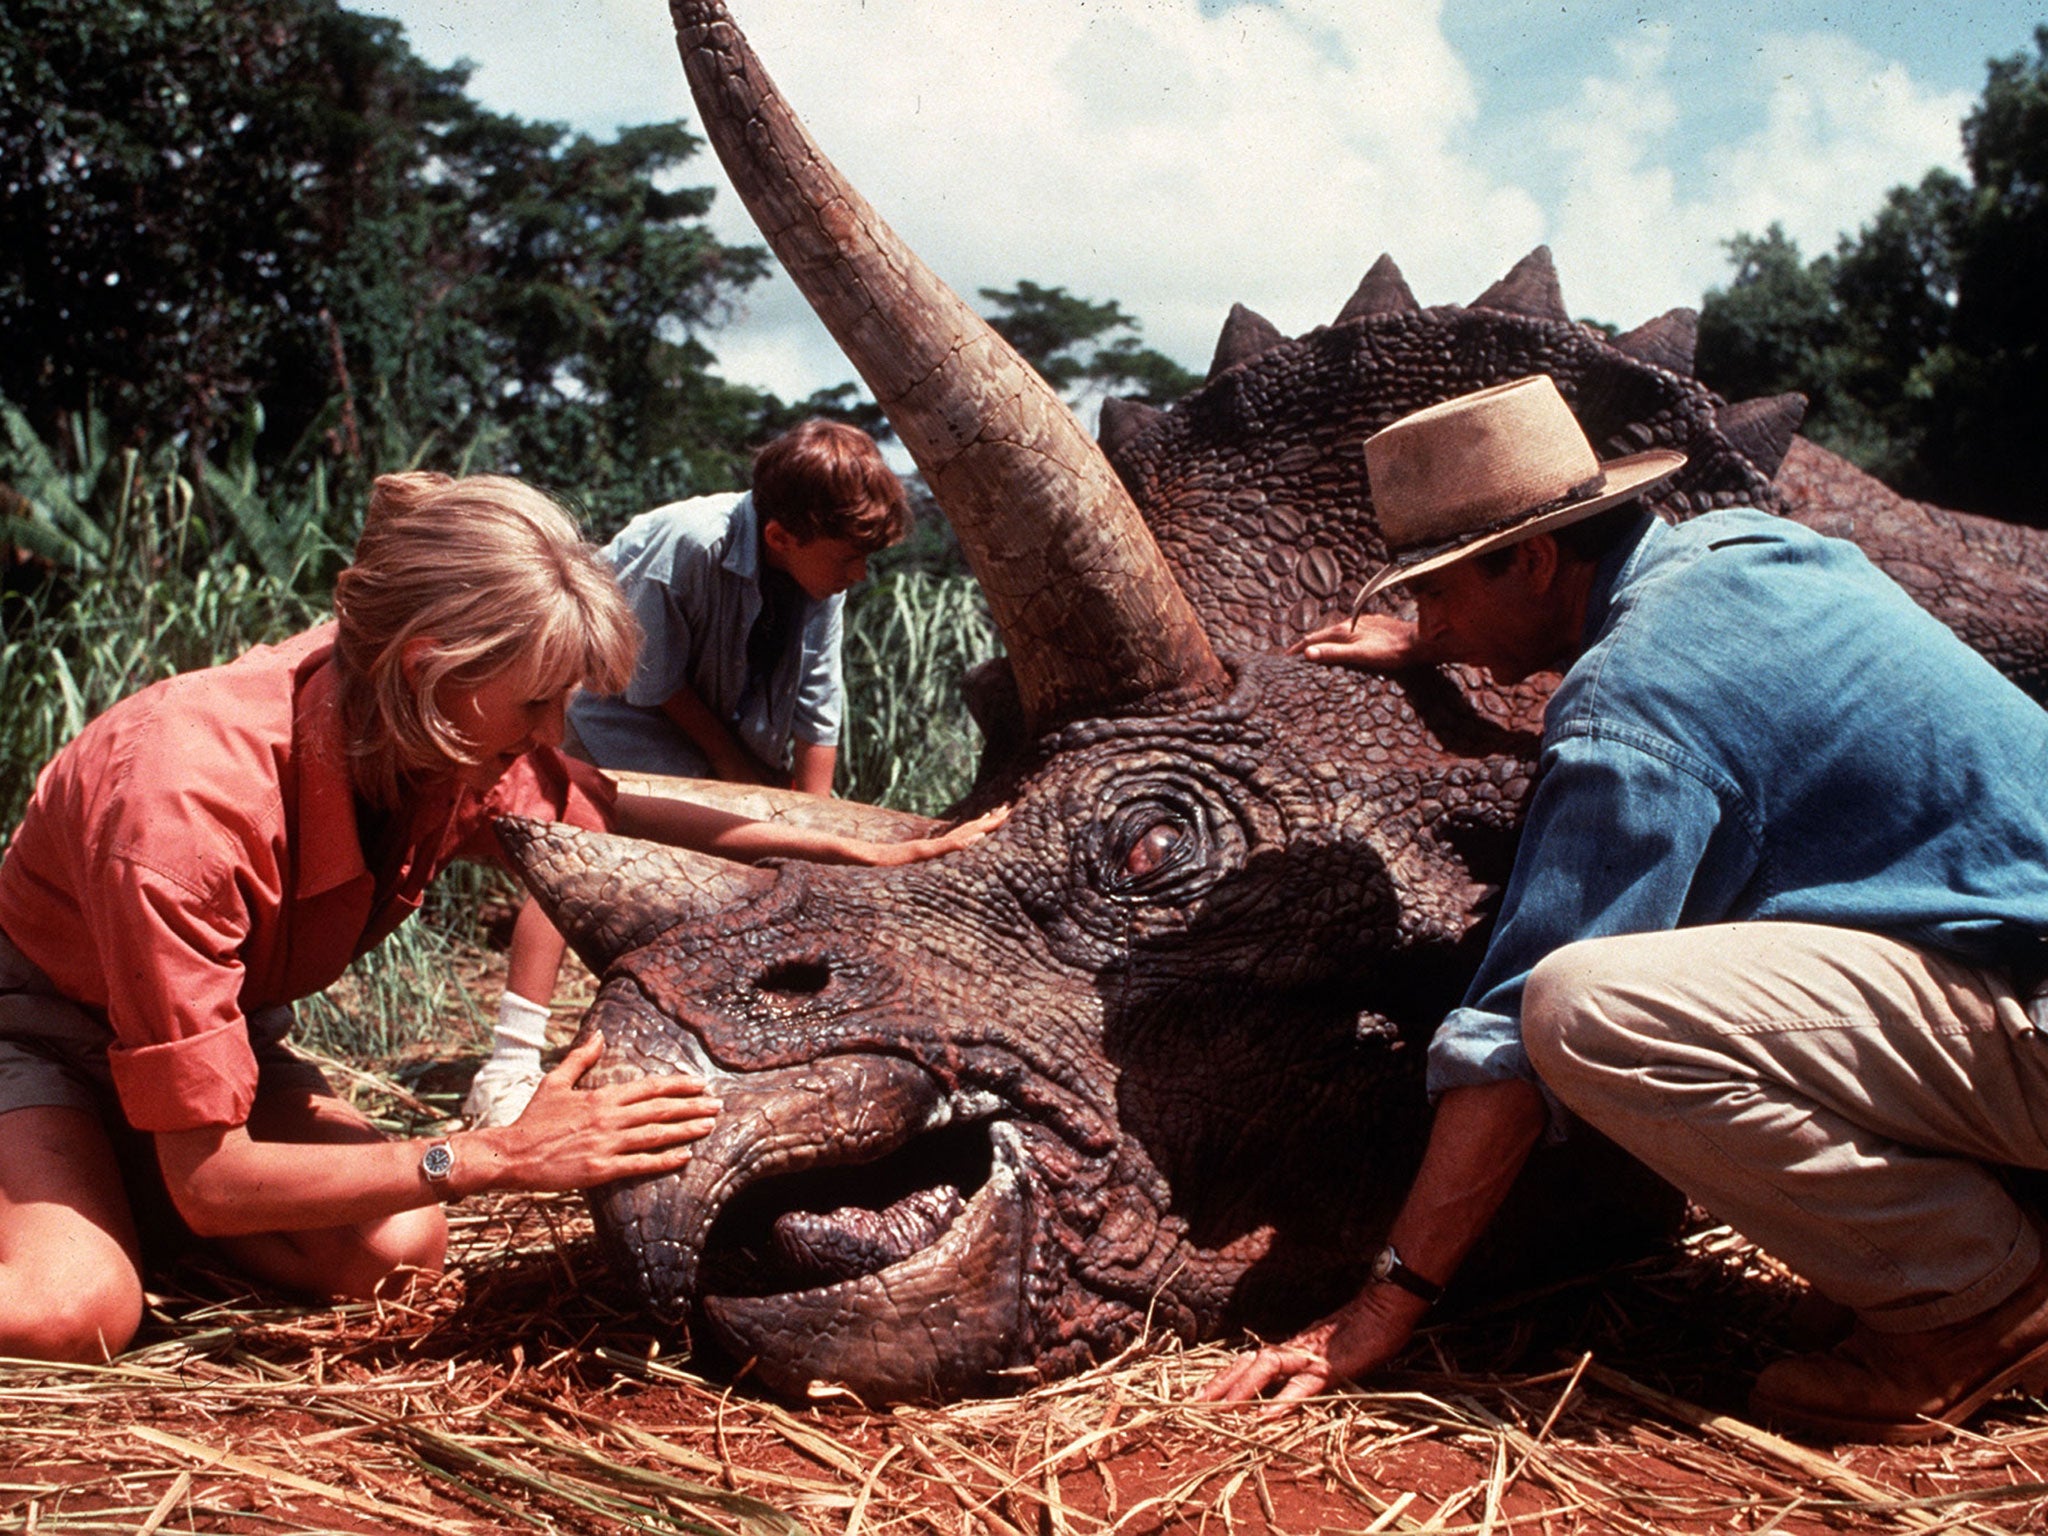 The original ‘Jurassic Park’ movie